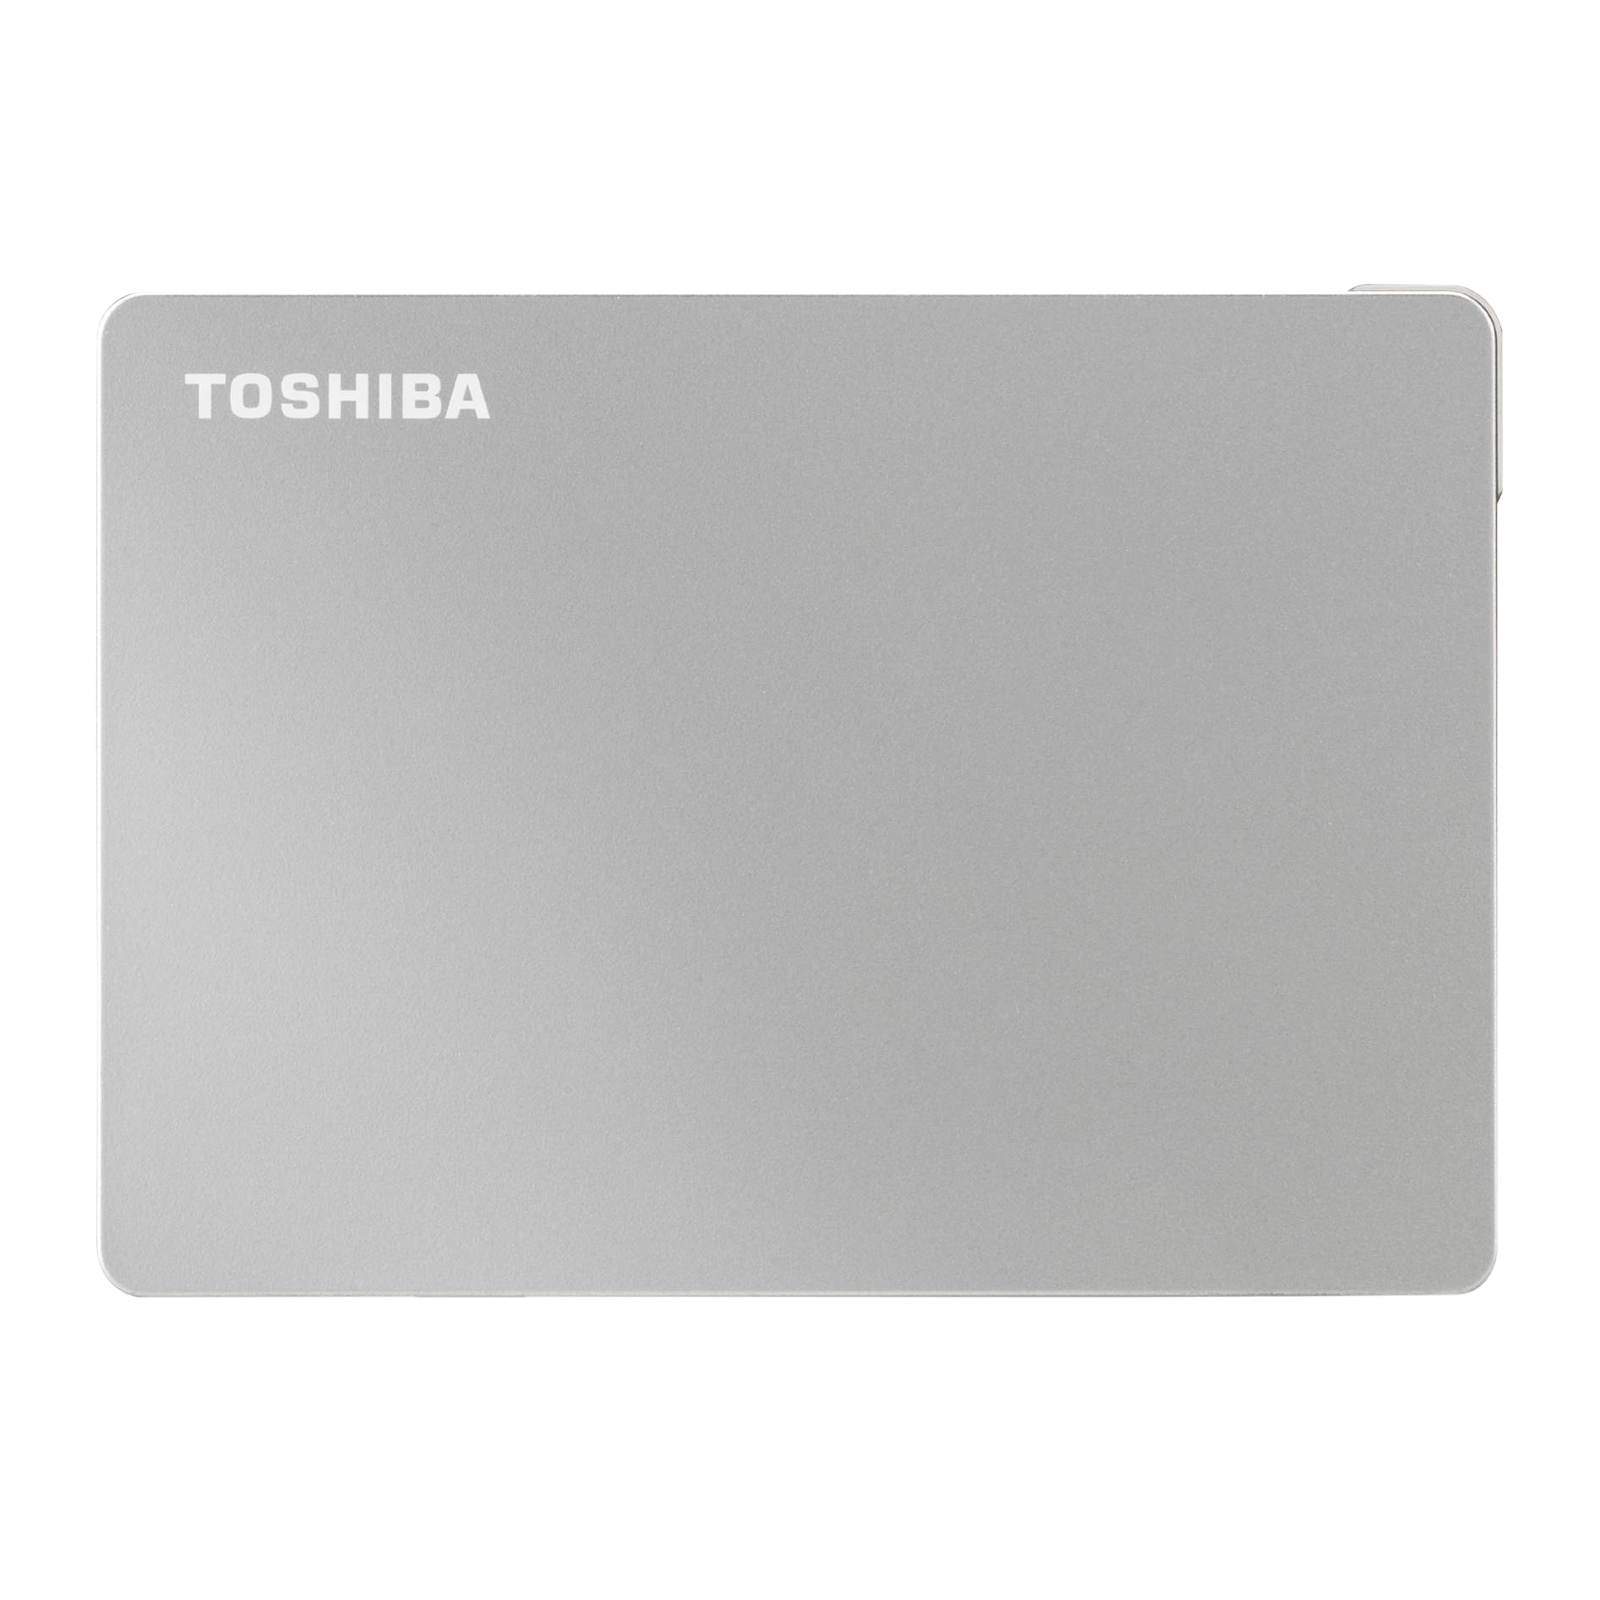 TOSHIBA Canvio Flex 4TB USB 3.0/USB 2.0 Hard Disk Drive (Cross-Device Compatibility, HDTX140ASCCA, Silver)